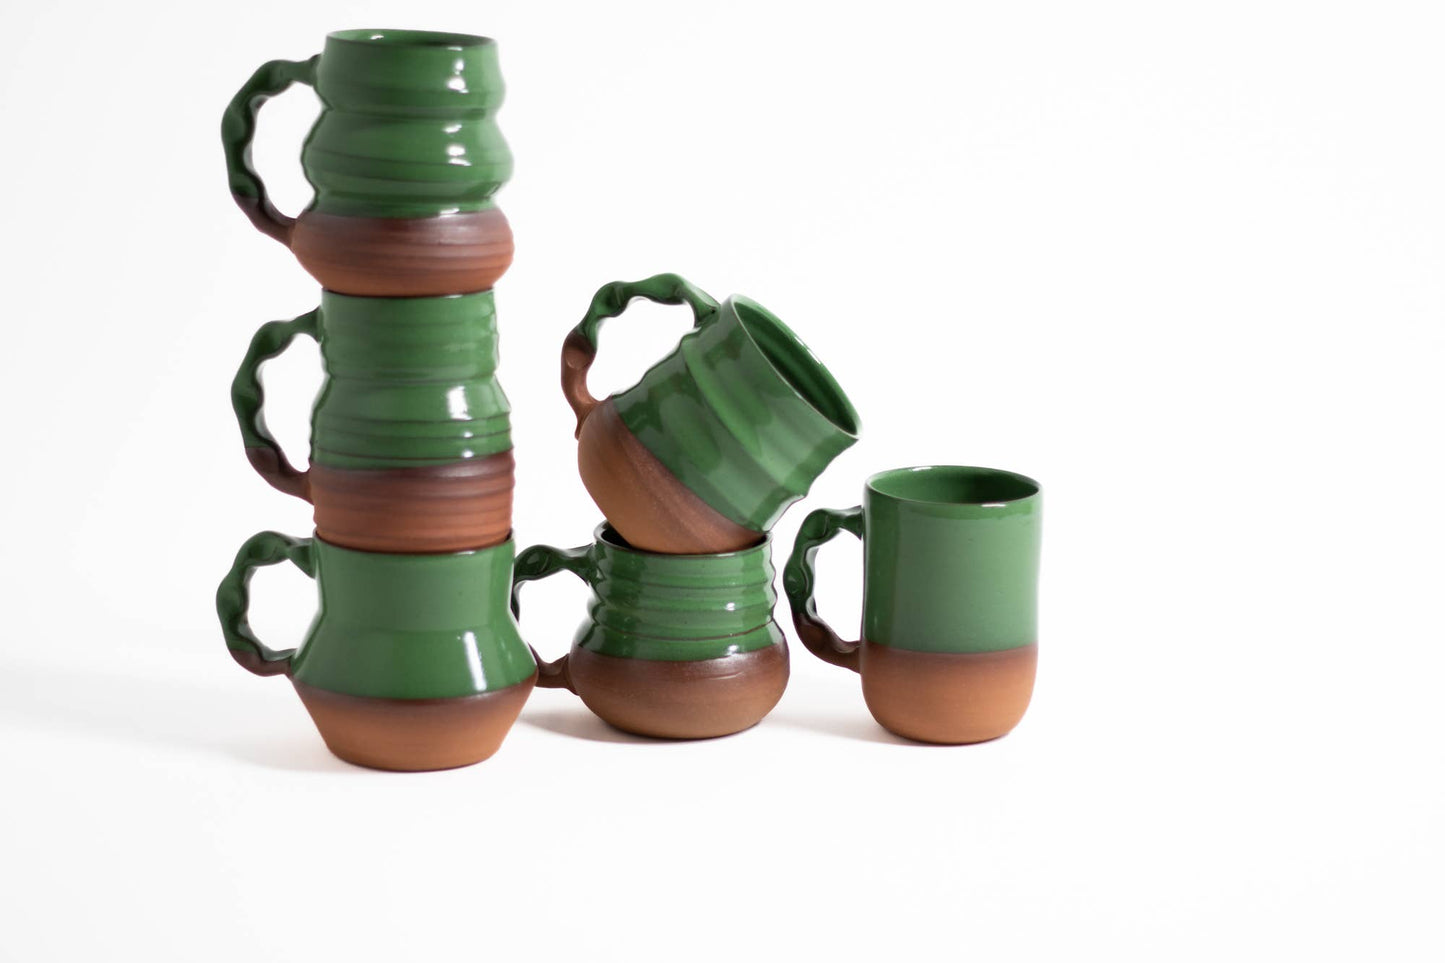 Assorted Mug Collection - Handmade - Forest Green